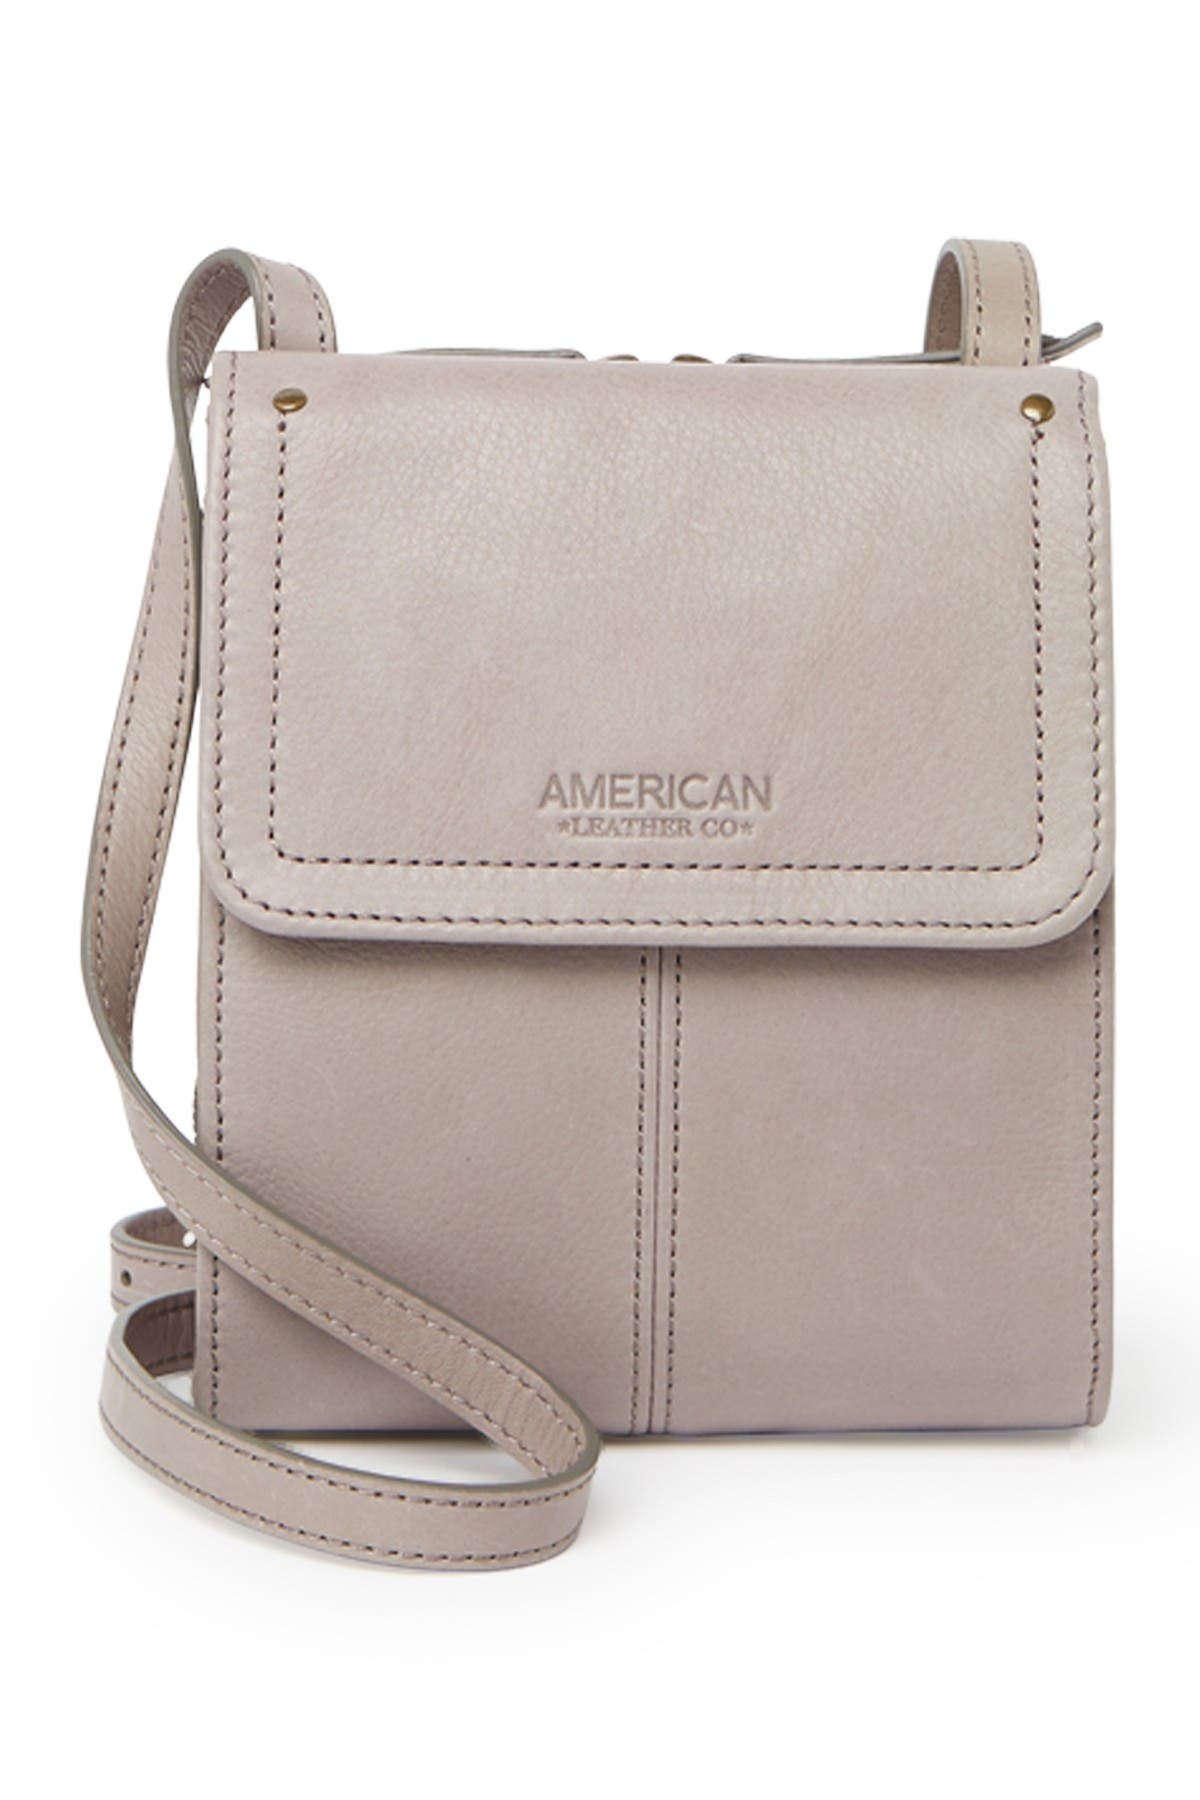 American Leather Co. Kansas Colorblock Crossbody Leather Bag In Medium Grey